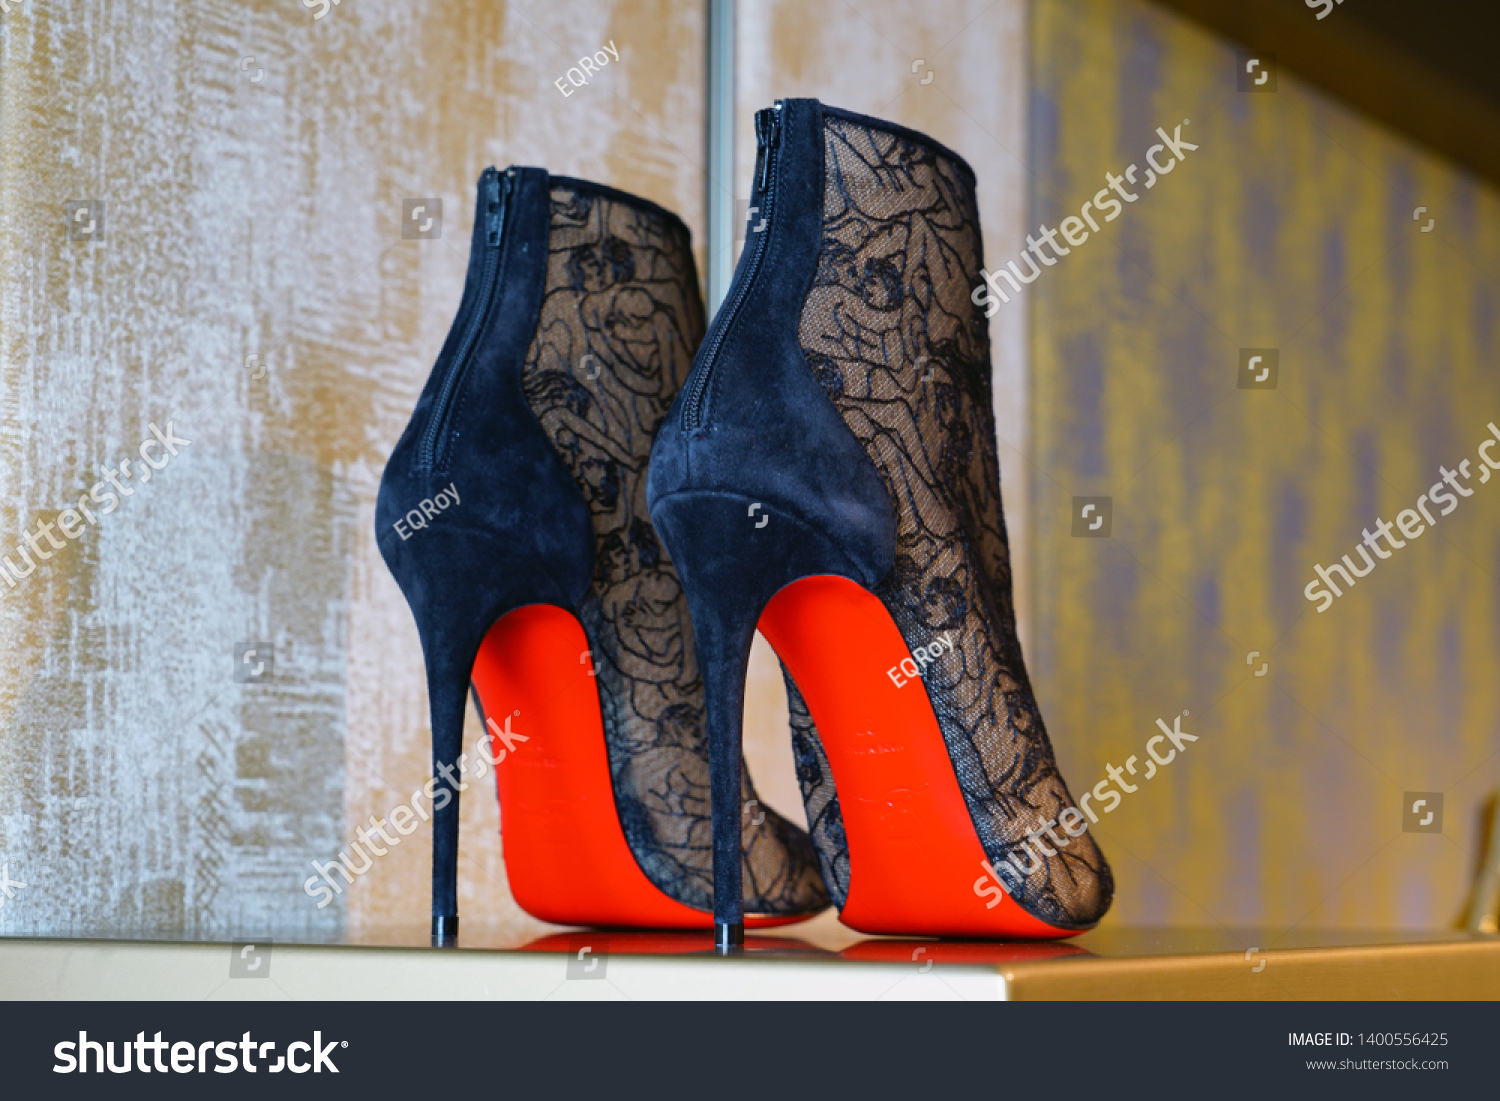 Christian louboutin shoes Images, Stock Photos & Vectors 